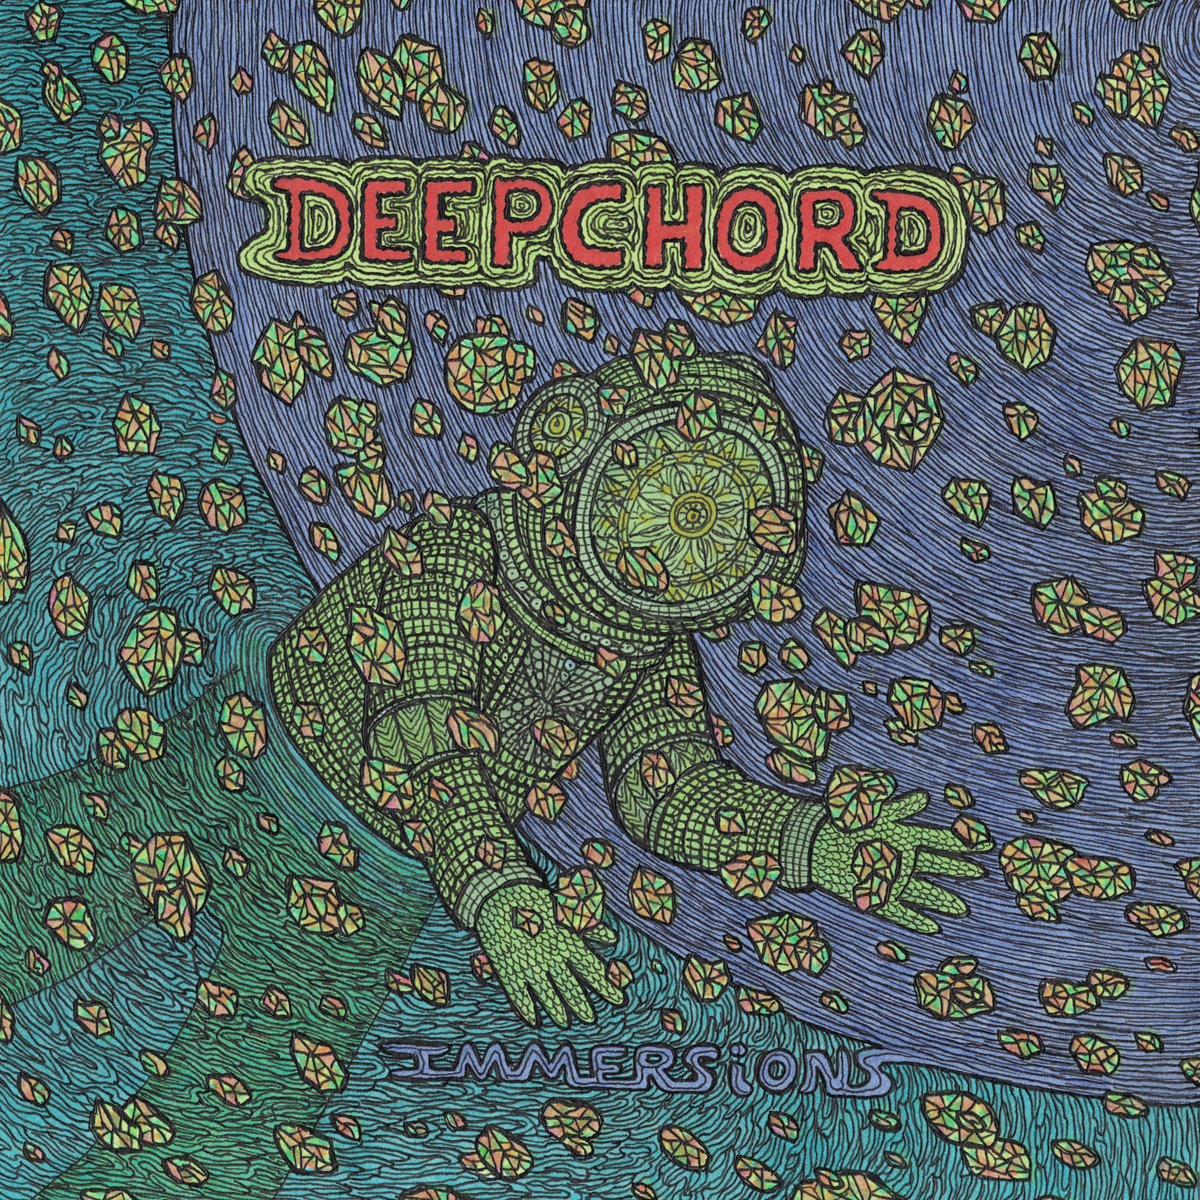 Deepchord – AI​-​10: Immersions